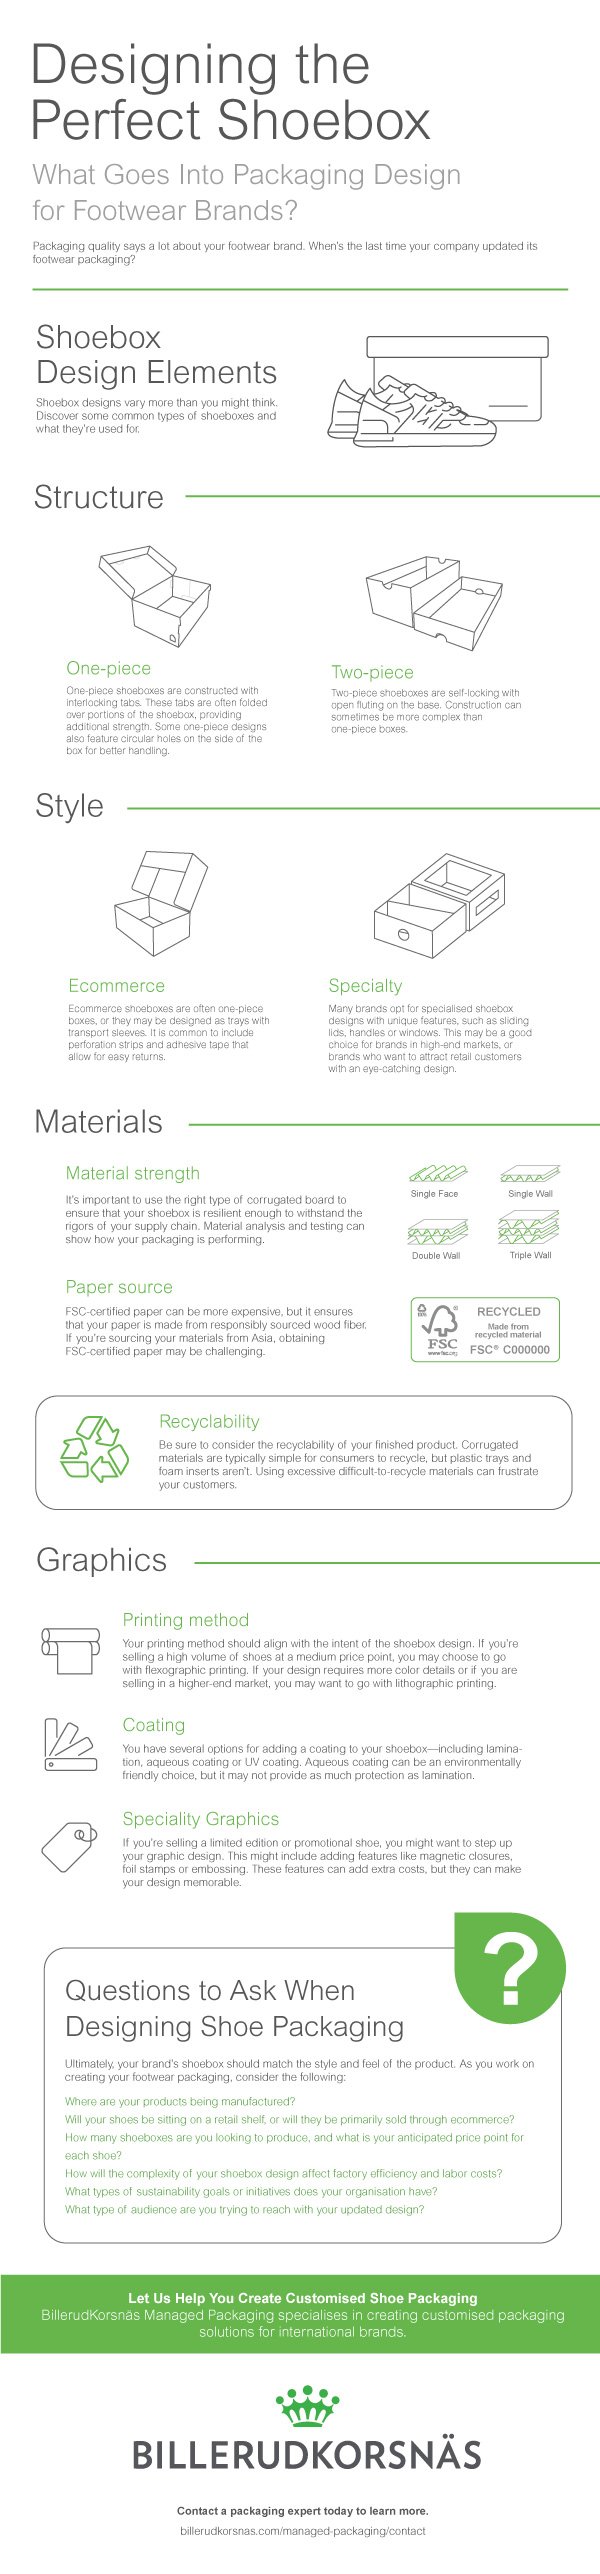 BILL-designing-the-perfect-shoebox-InfographicV3 (1).jpg